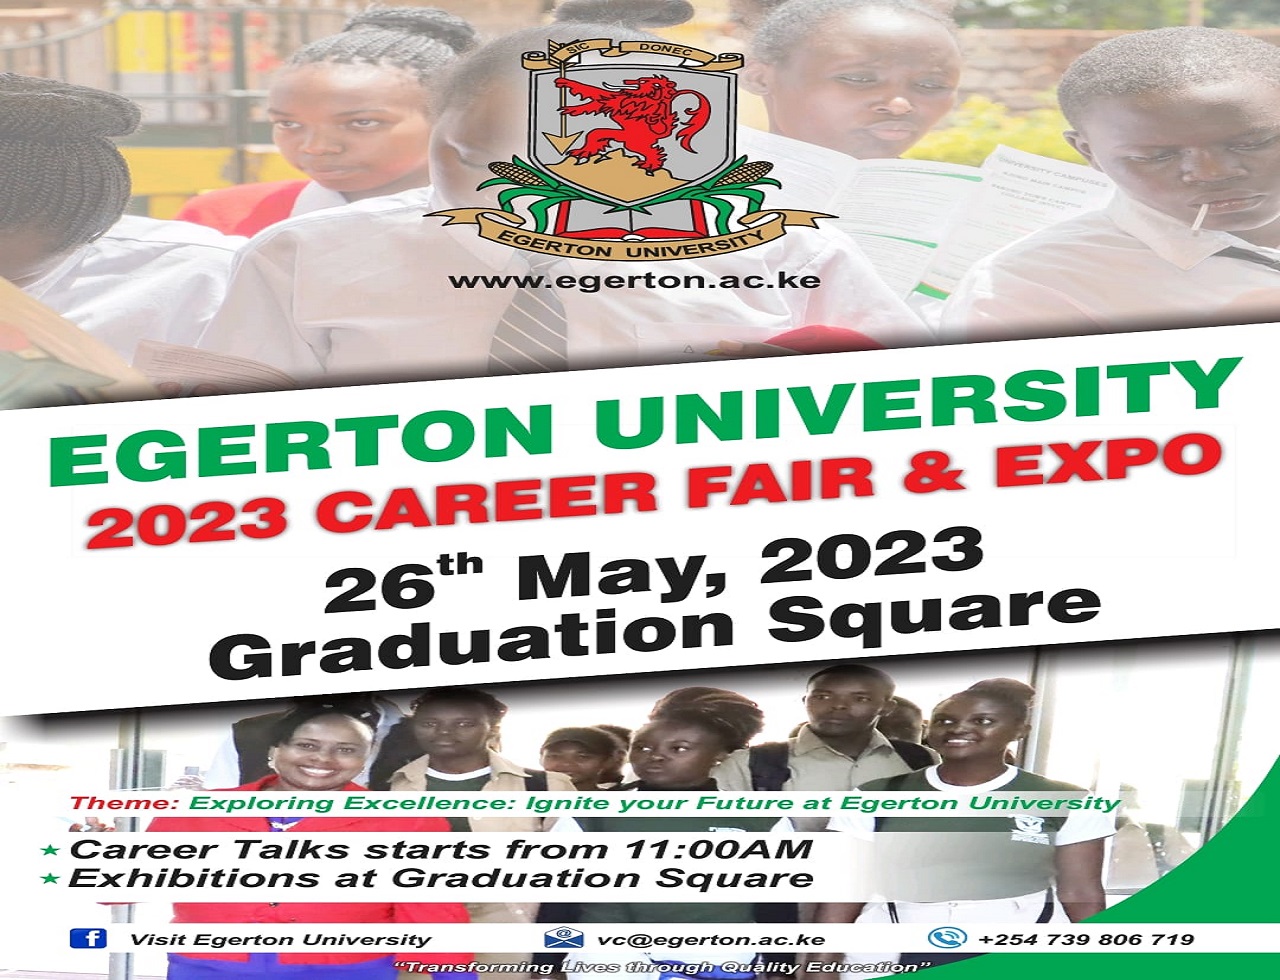 Egerton University 2023 Career Fair & Expo